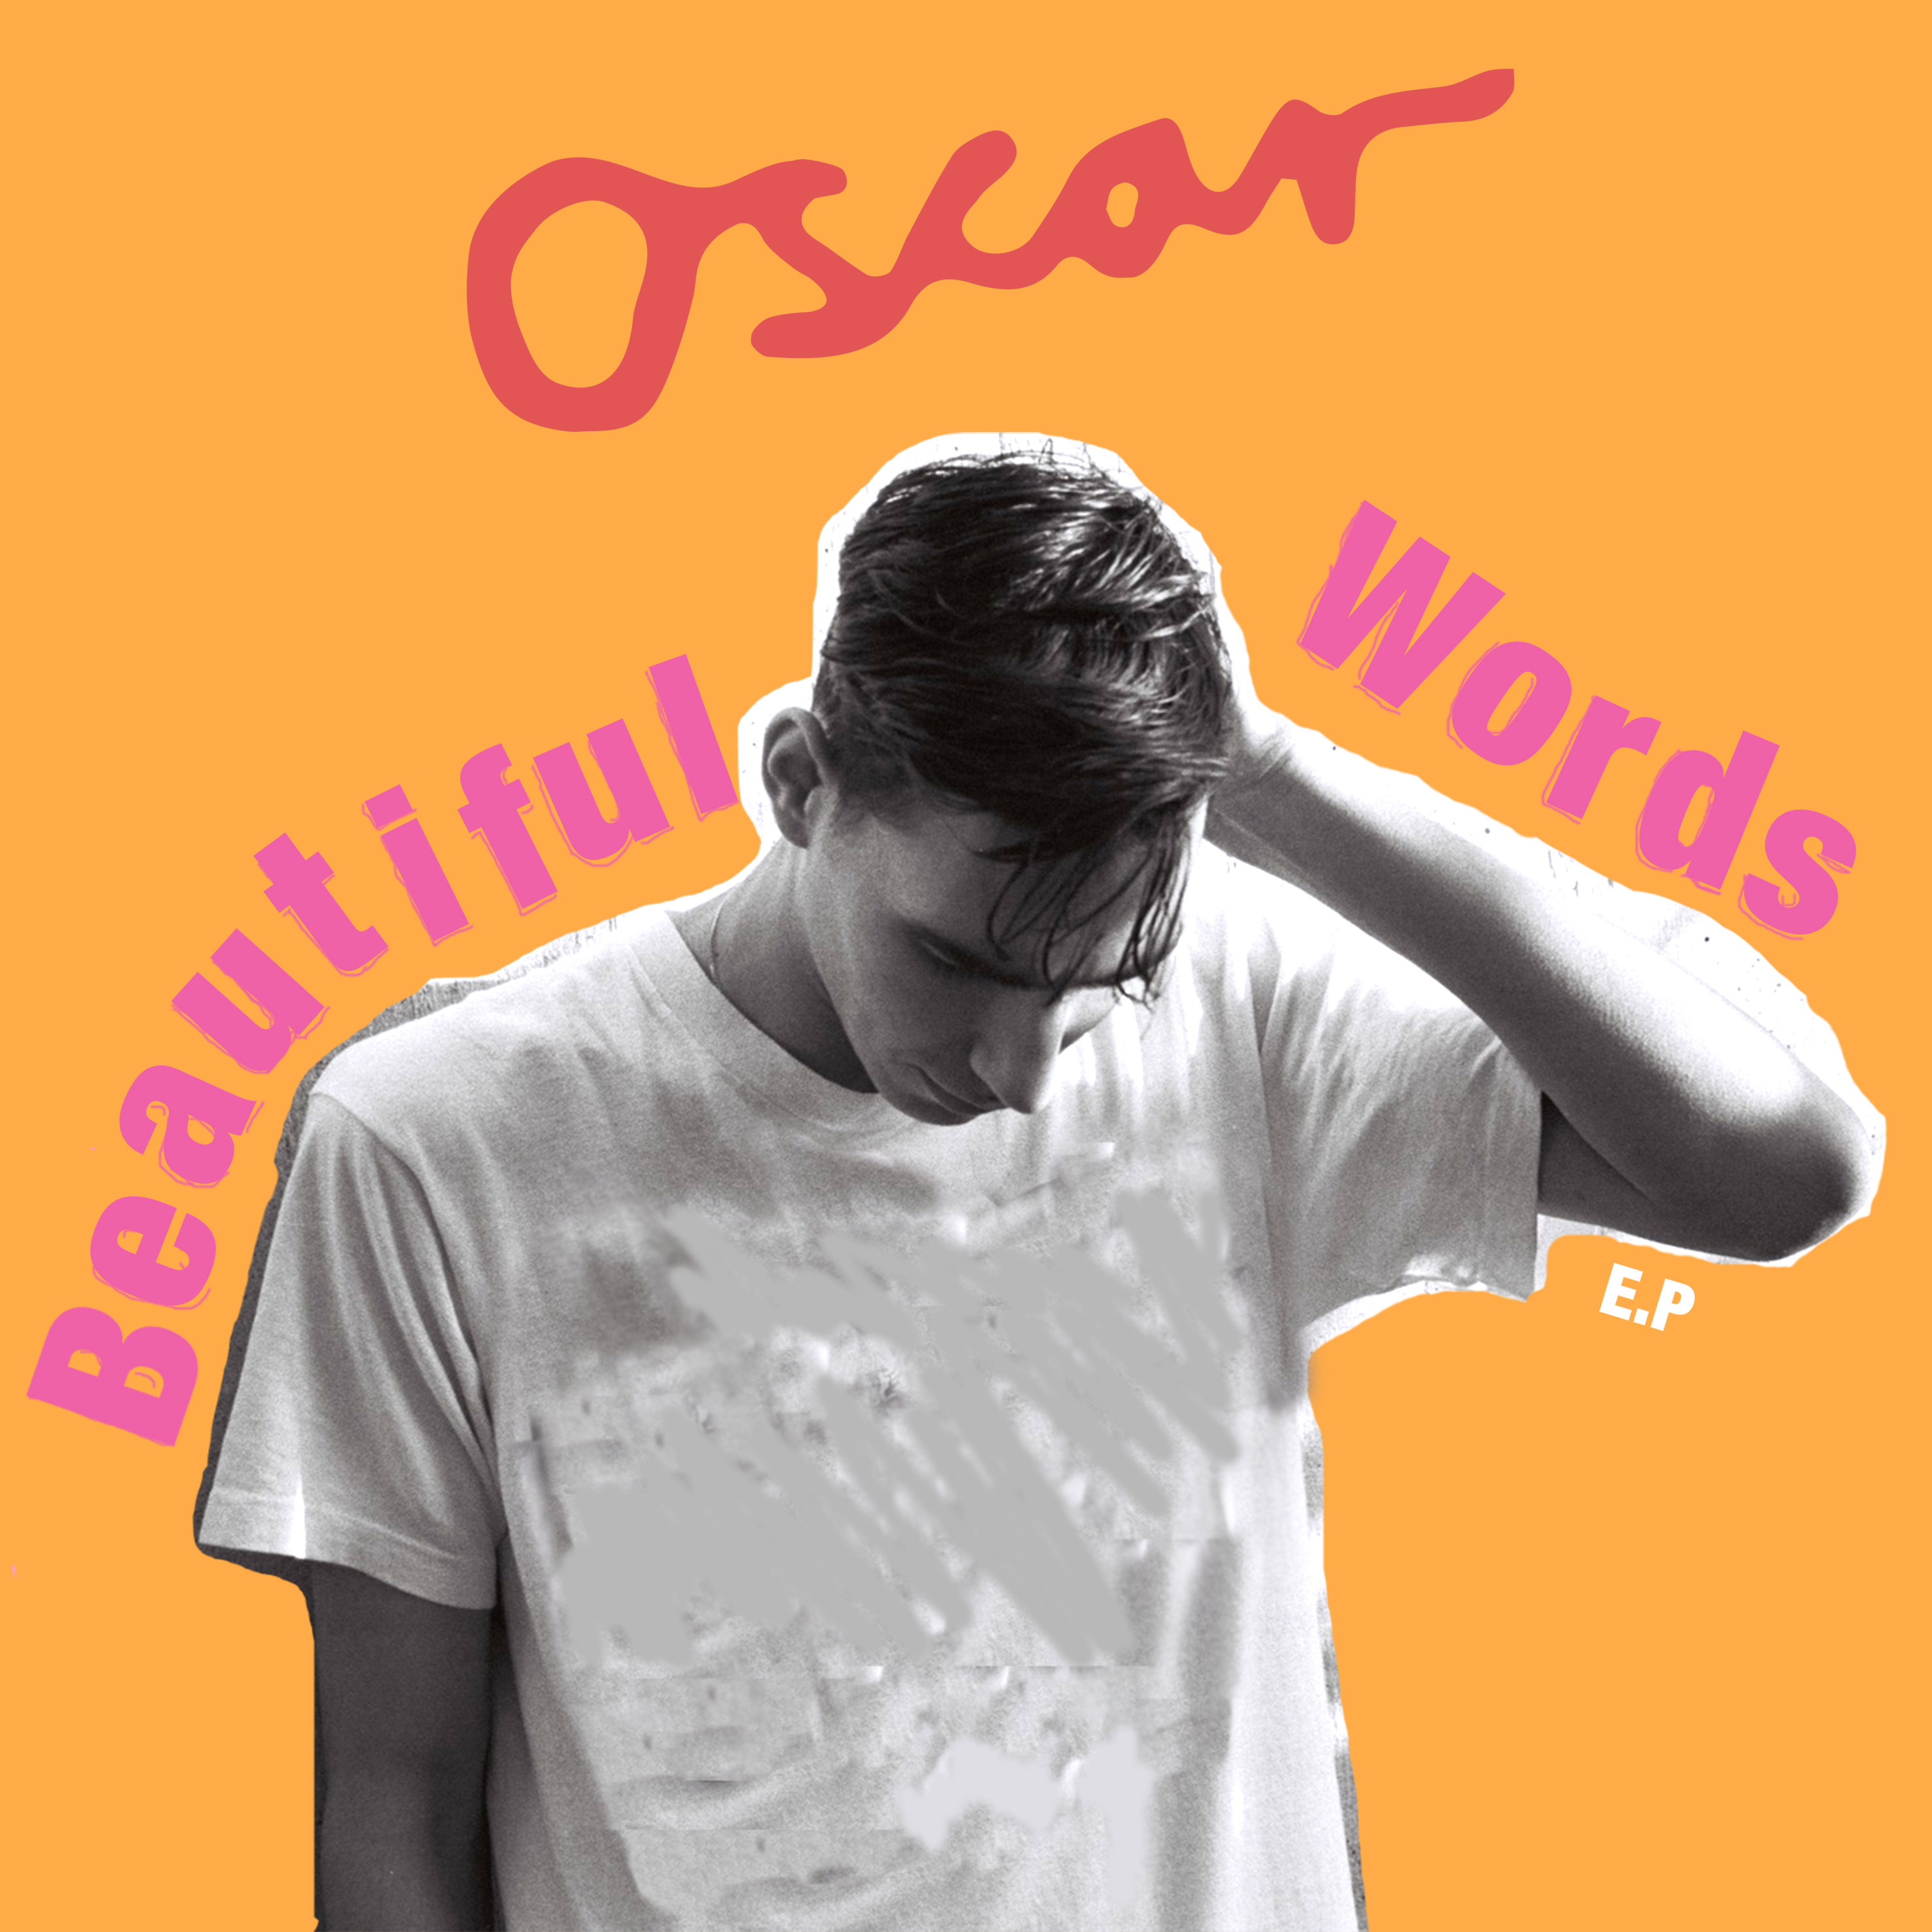  : Beautiful Words EP (Beautiful Words EP)